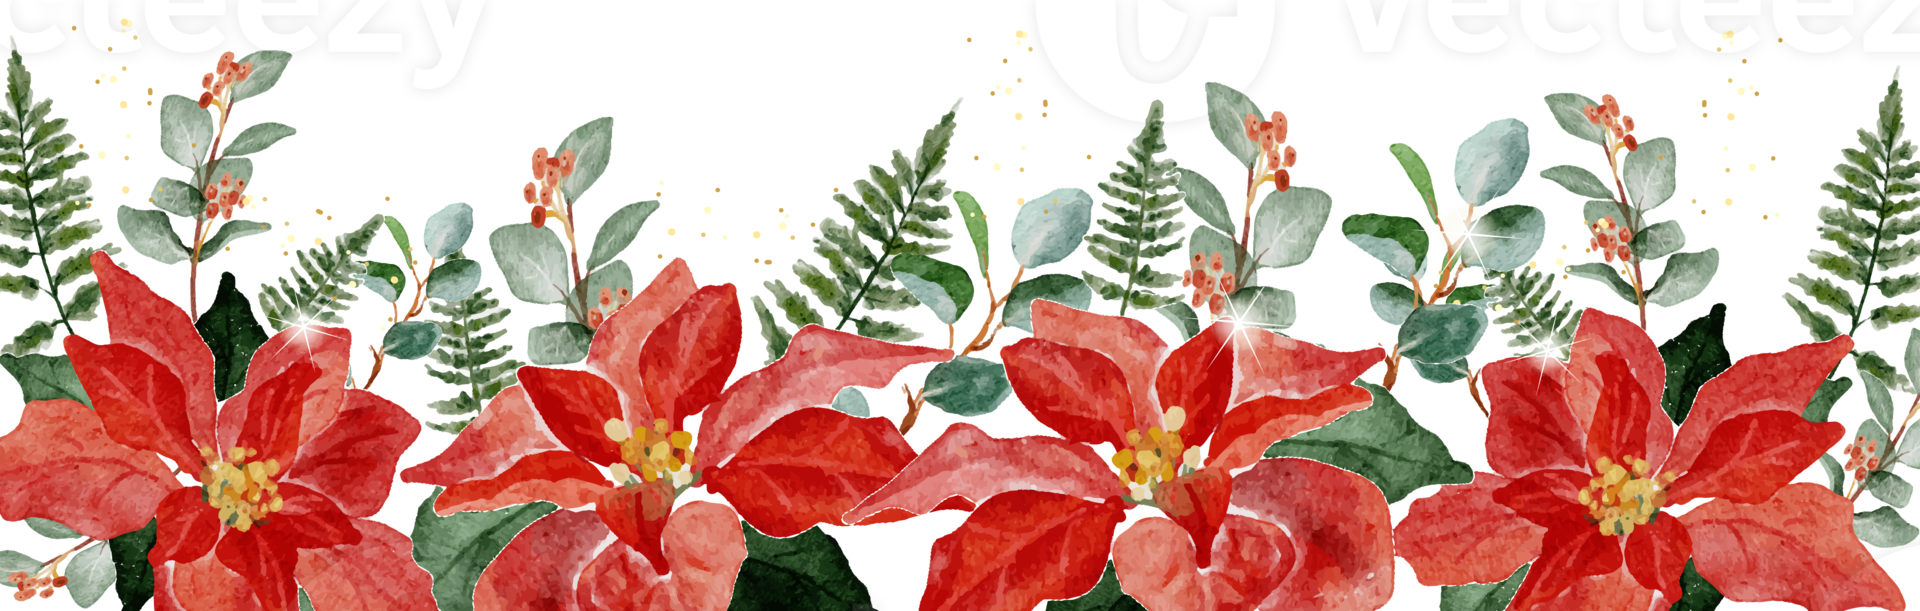 Free marco de corona de ramo de flores de flor de pascua de navidad de  acuarela con brillo dorado 9413826 PNG with Transparent Background